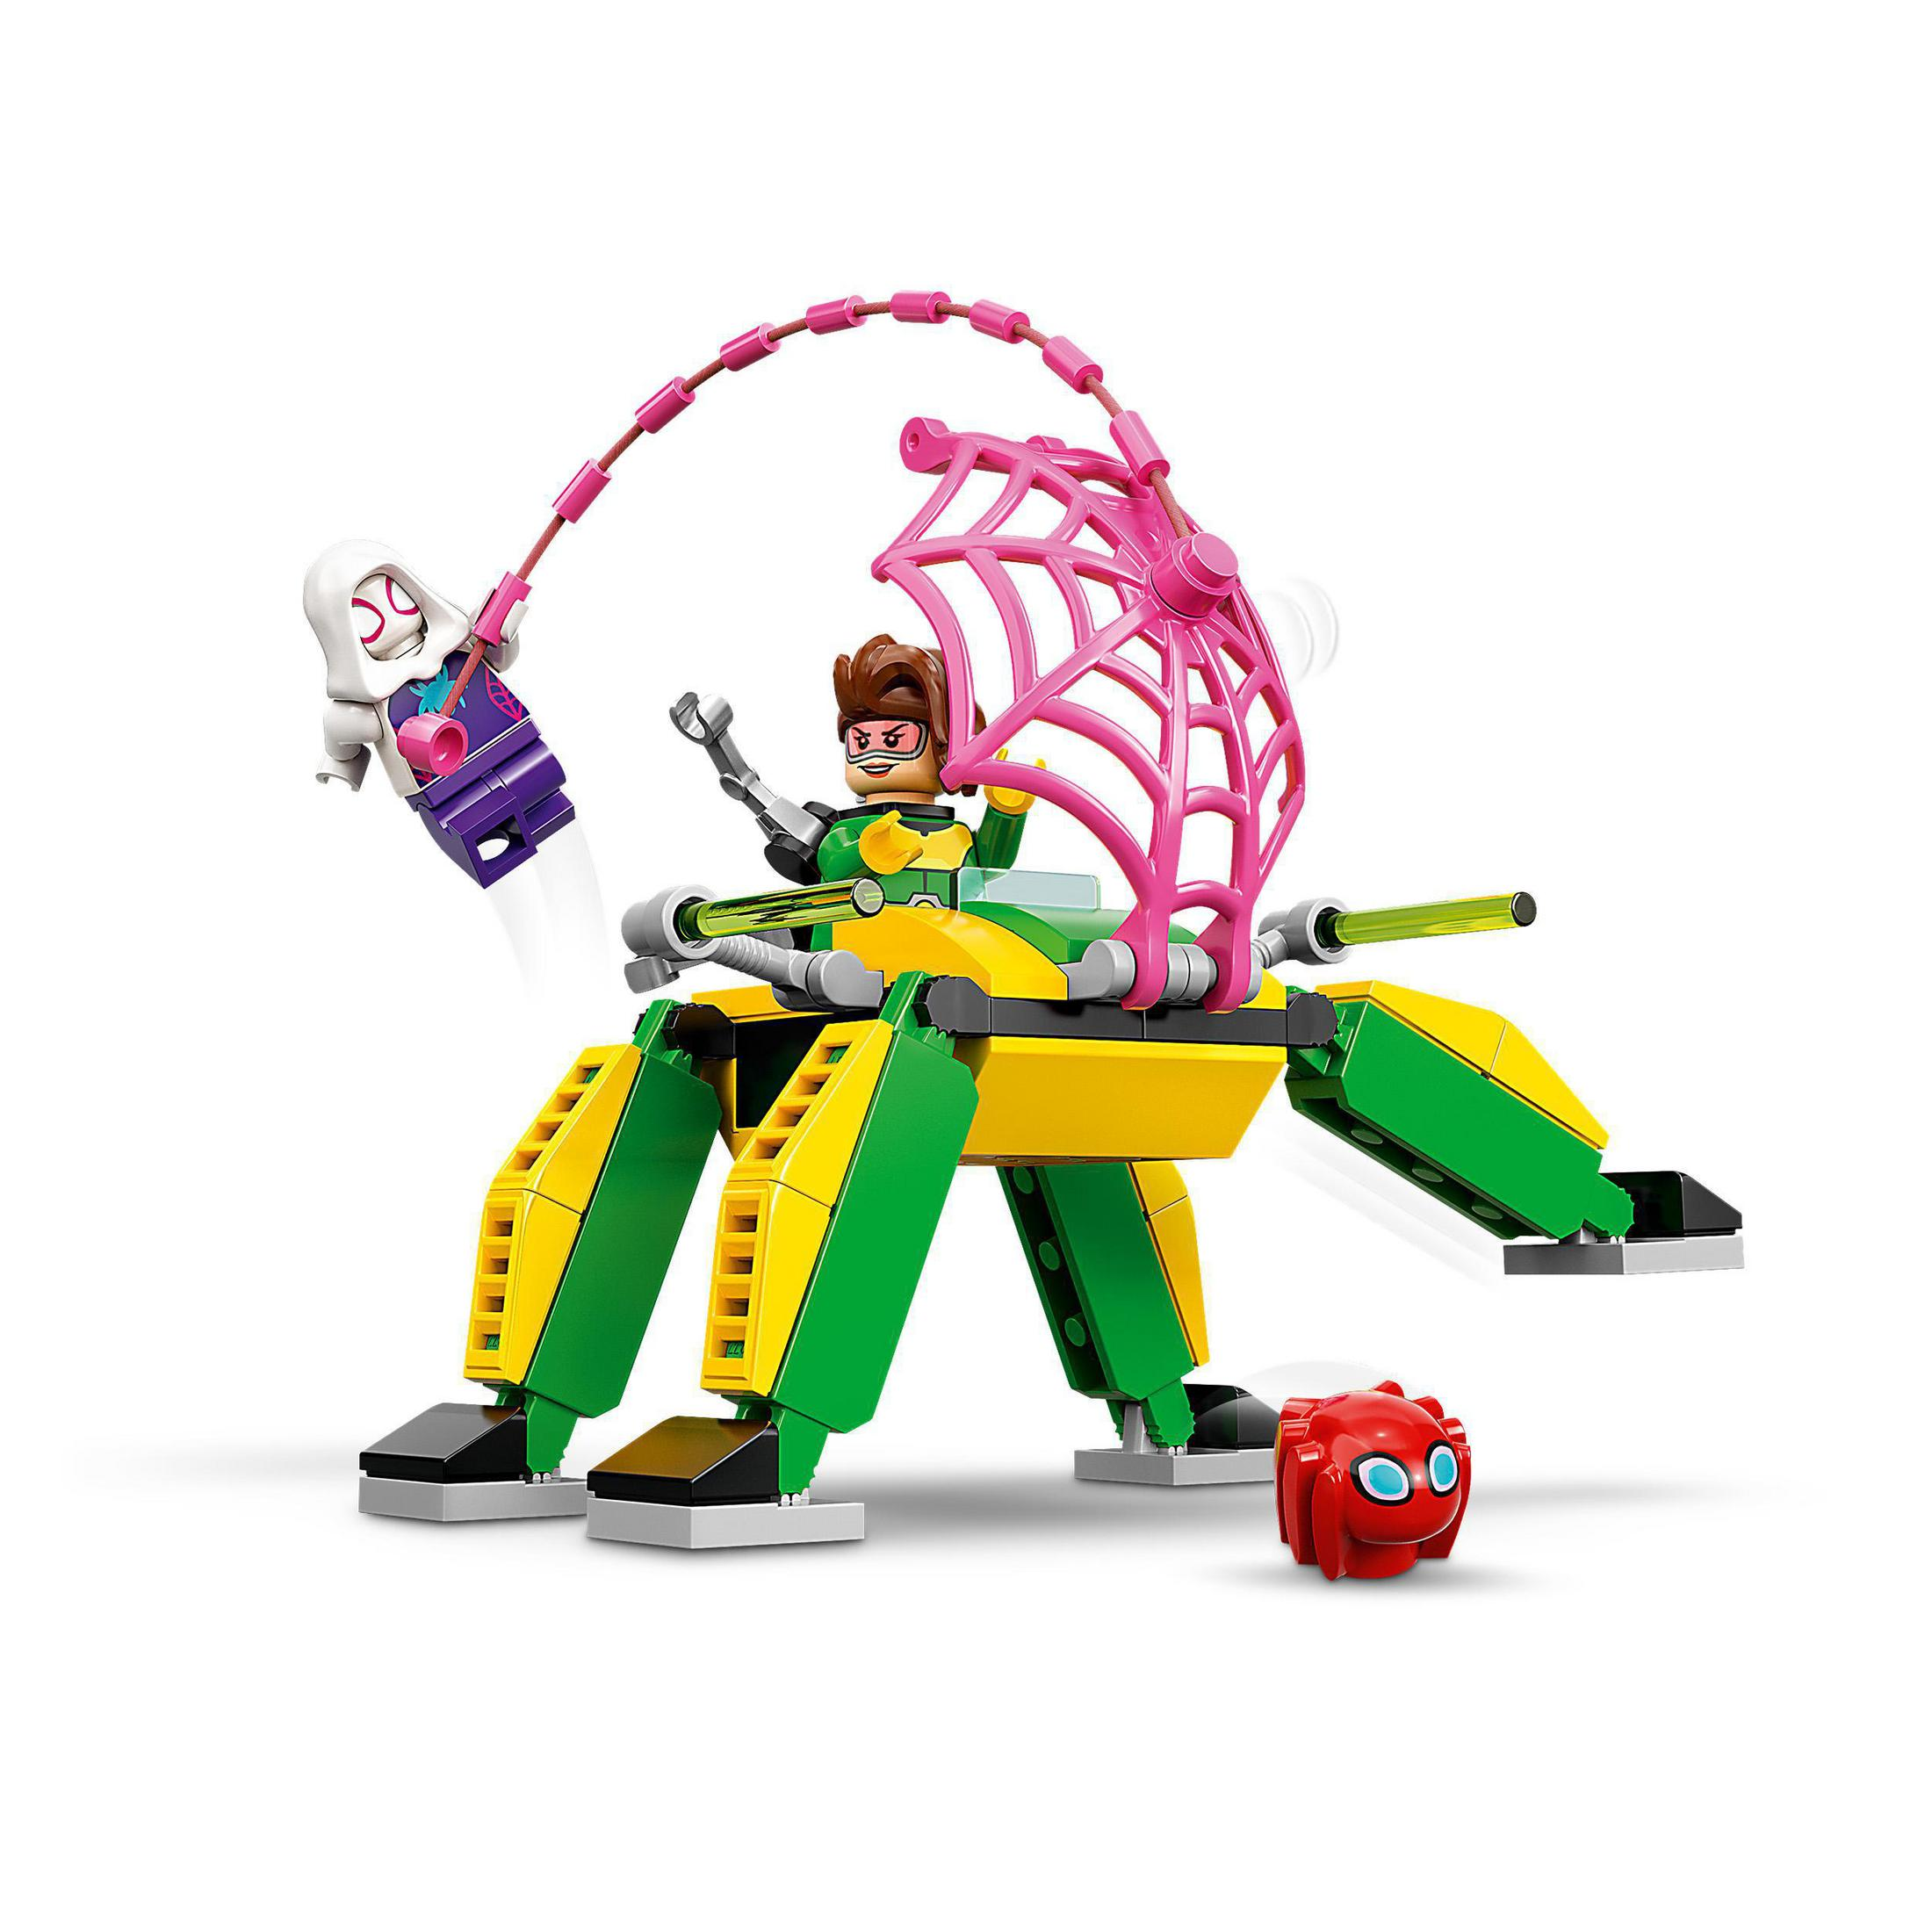 LEGO 10783 SPIDER-MAN IN LABOR DOC OCKS Mehrfarbig Bausatz